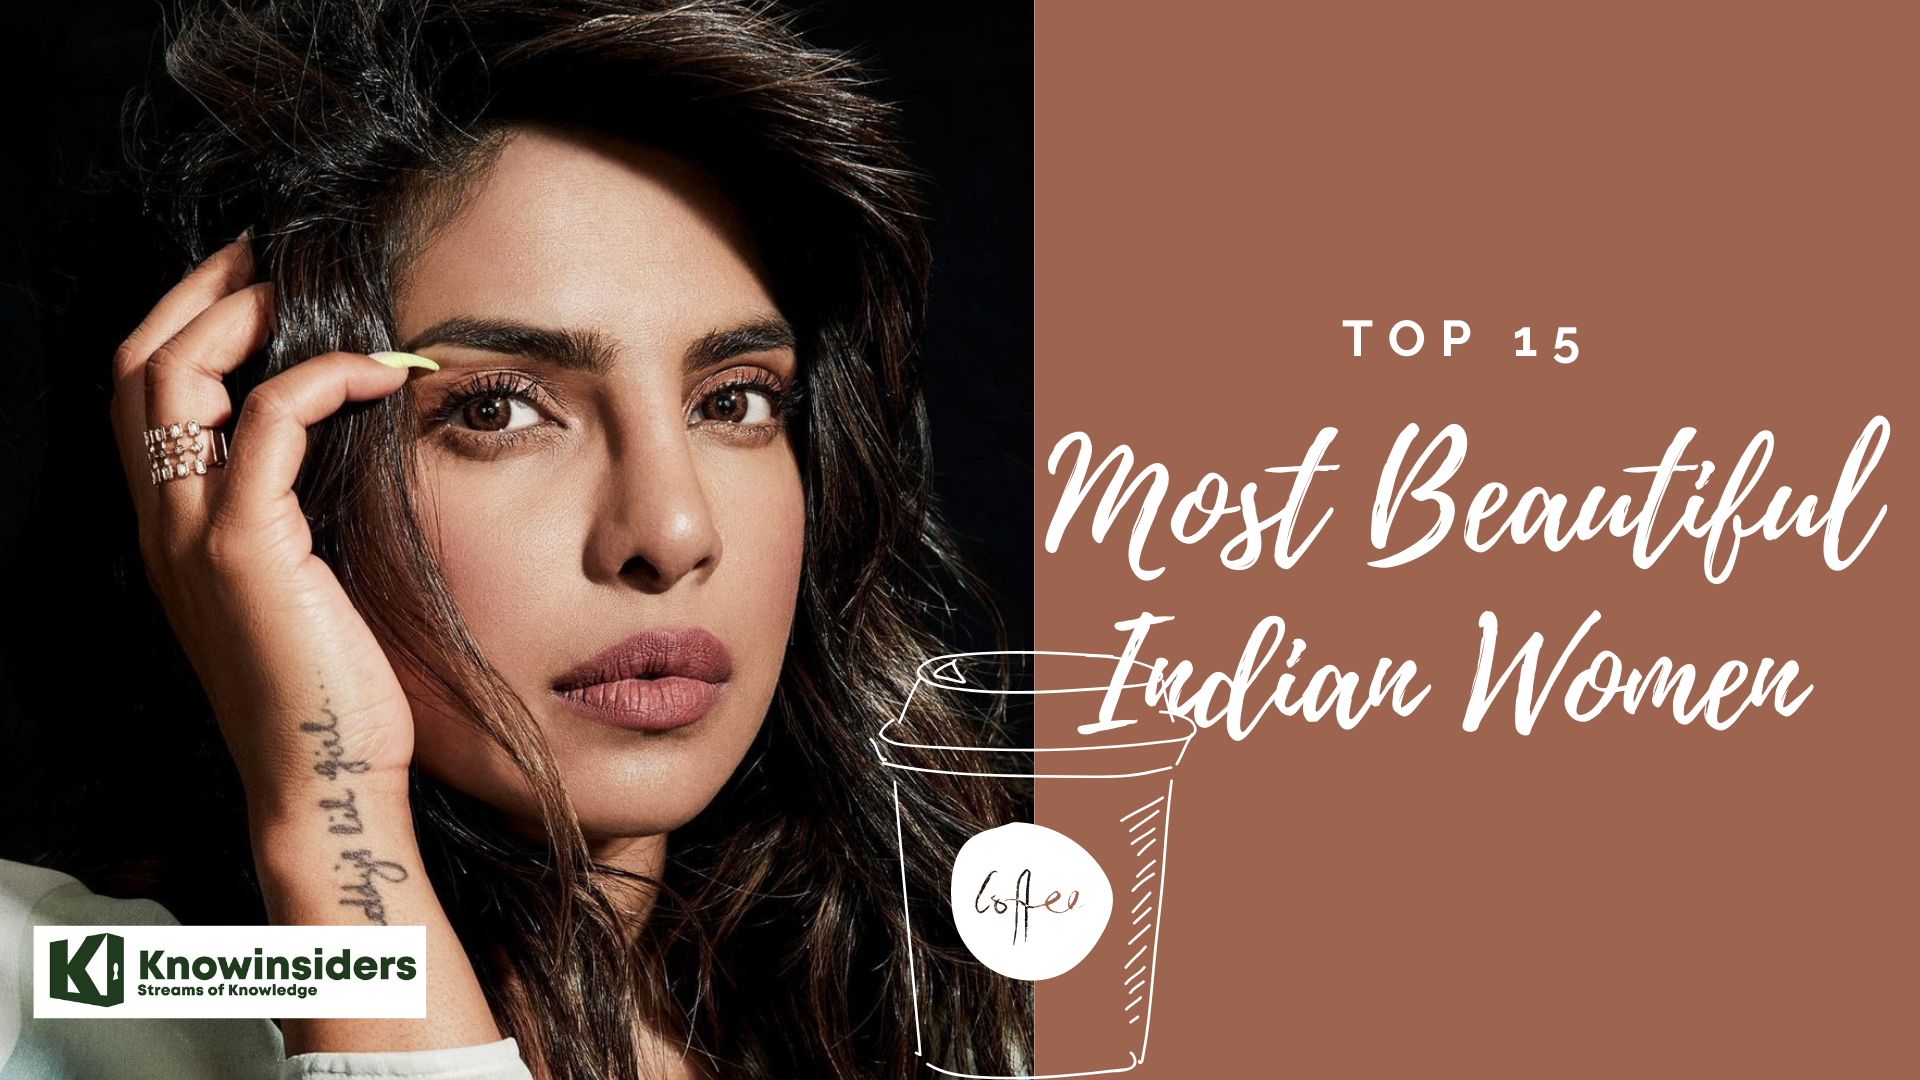 Top 15 Most Beatutiful Indian Women Today